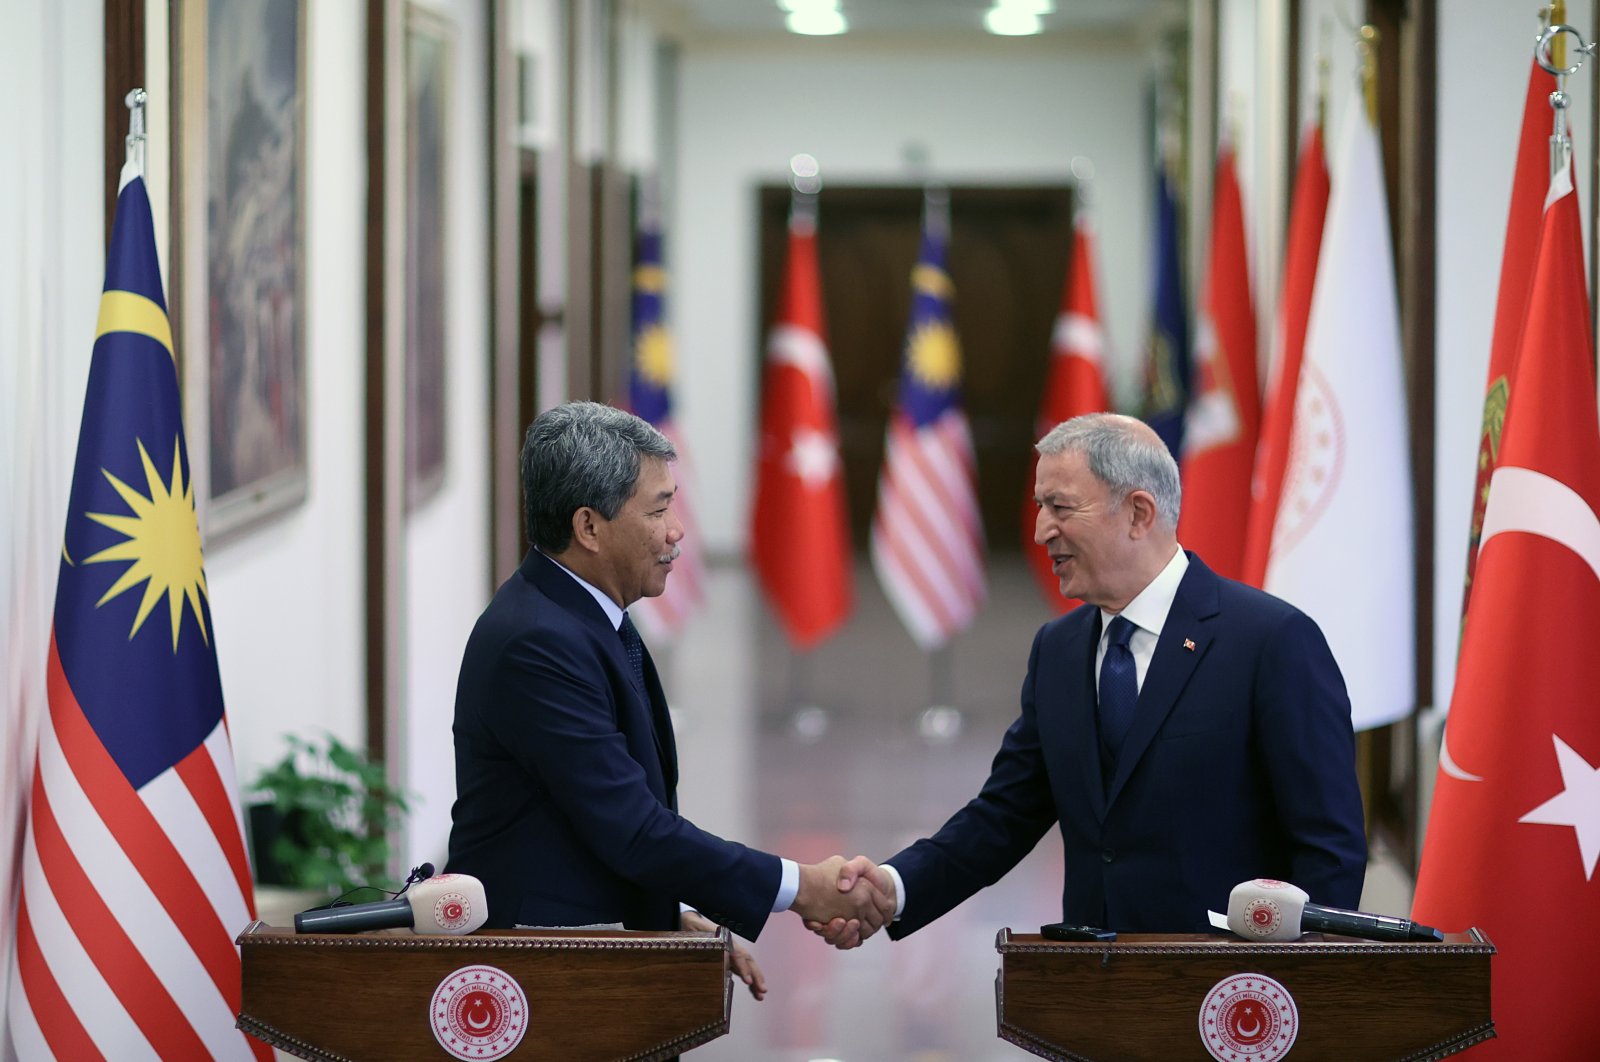 Defense Minister Hulusi Akar (R) shakes hands with his Malaysian counterpart Utama Mohamad bin Haji Hasan at a news conference in Ankara, Türkiye, March 20, 2023. (AA Photo)